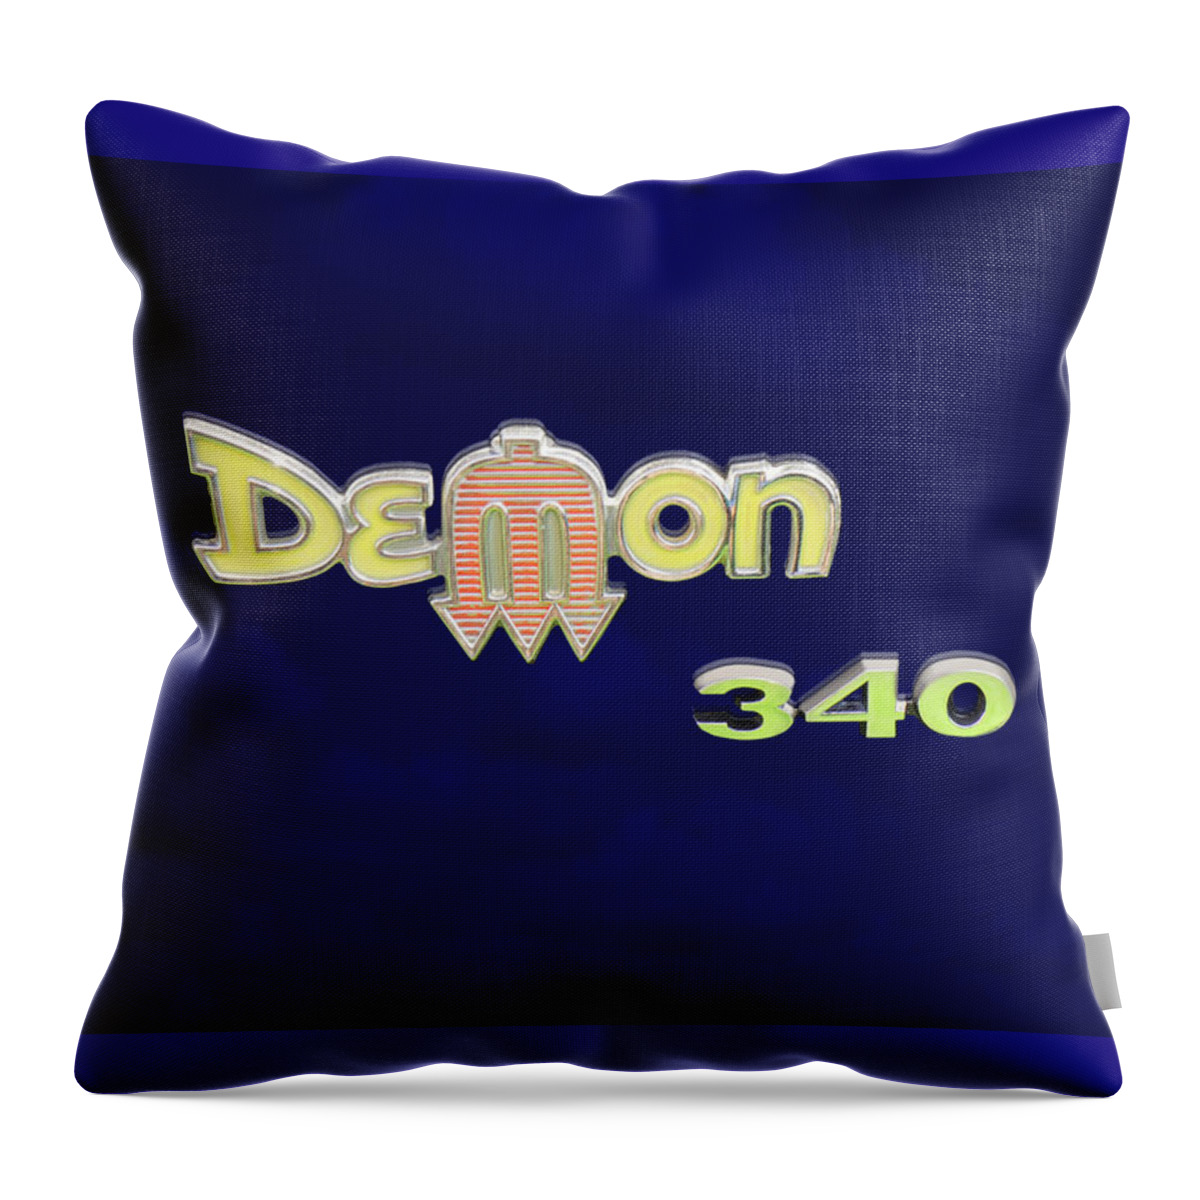 Dodge Throw Pillow featuring the photograph Demon 340 Emblem by Mike McGlothlen